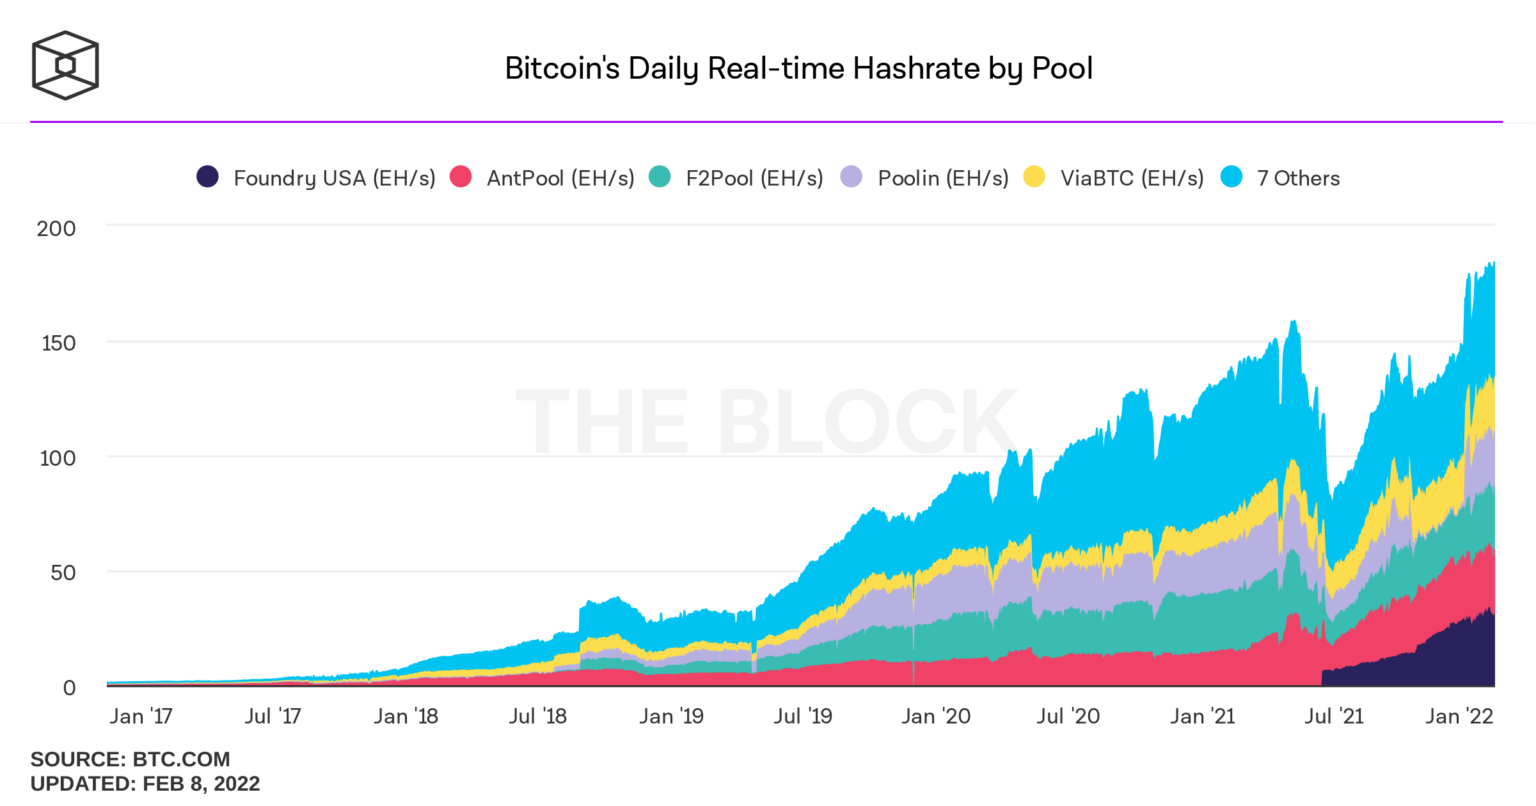 bitcoin hashrate to reach ATH